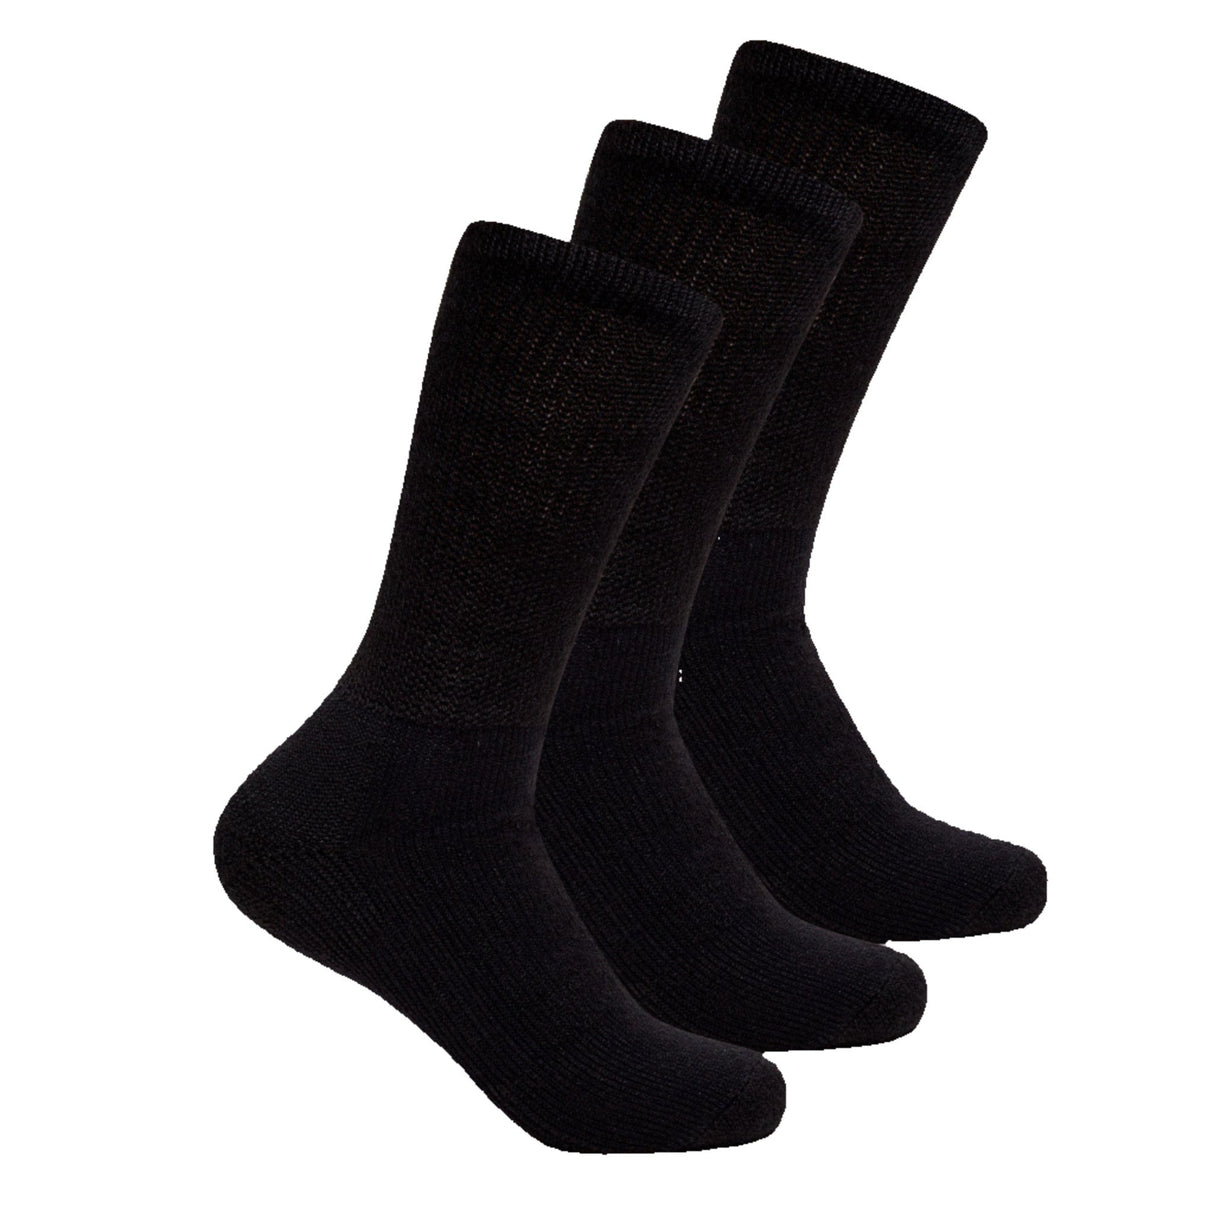 Thorlo Walking Moderate Cushion Crew Socks  -  Medium / Black / 3-Pair Pack